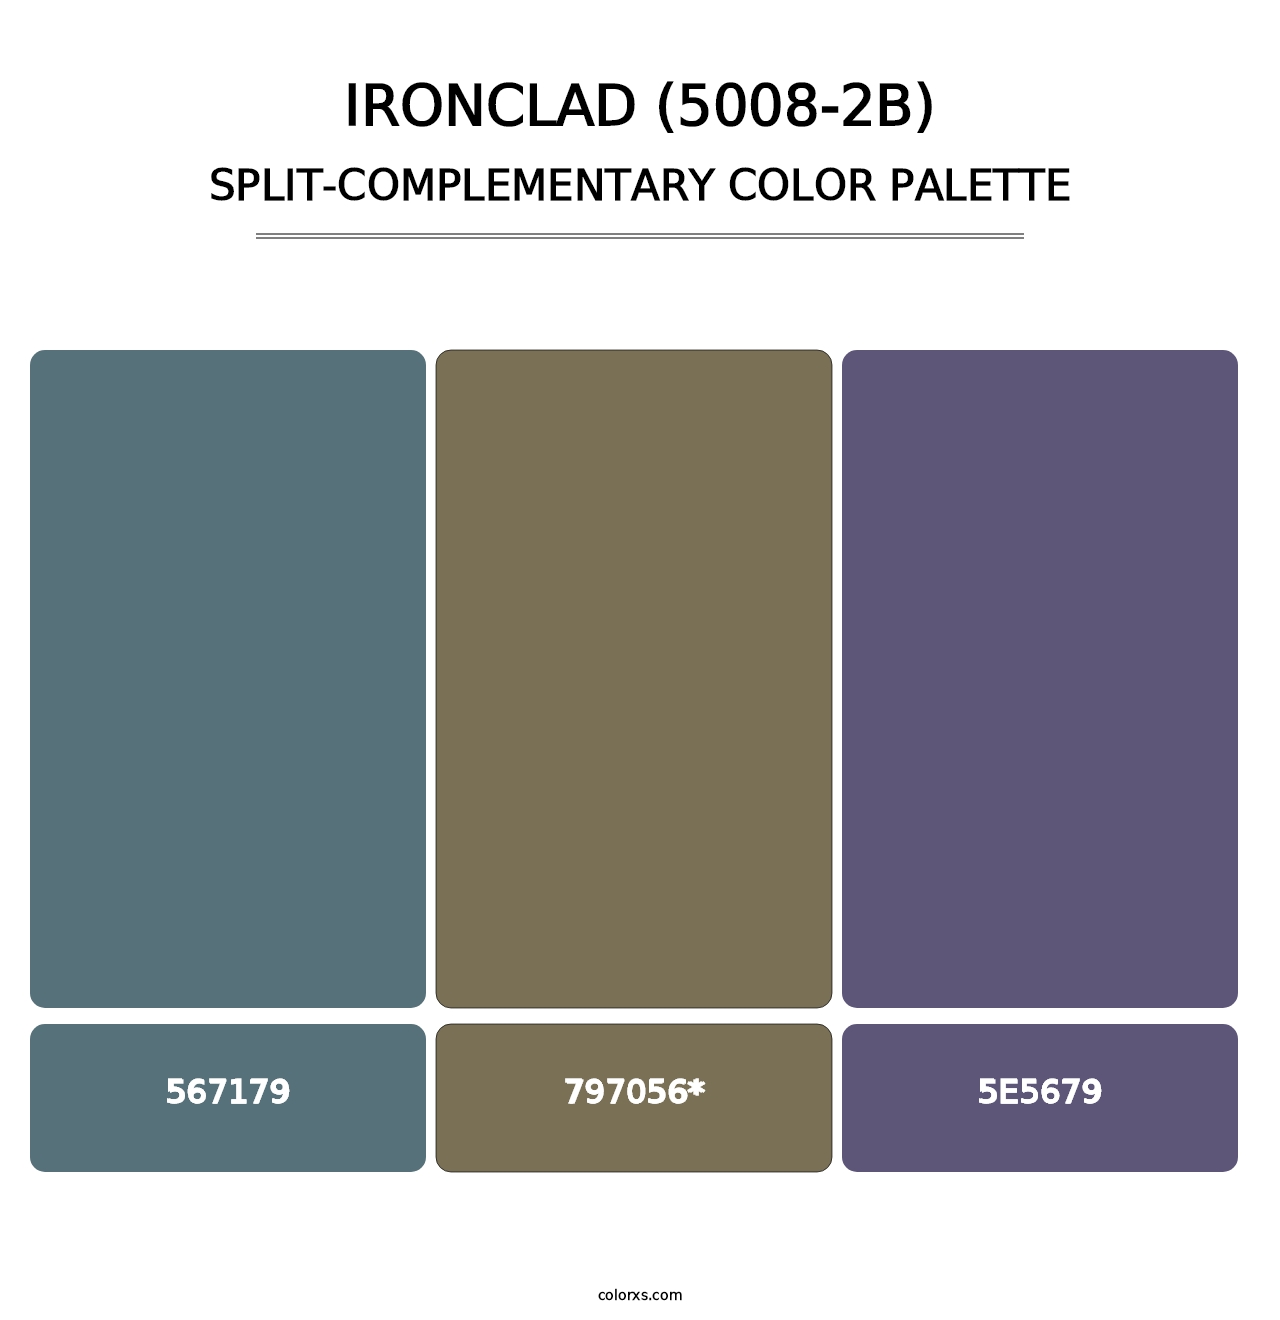 Ironclad (5008-2B) - Split-Complementary Color Palette